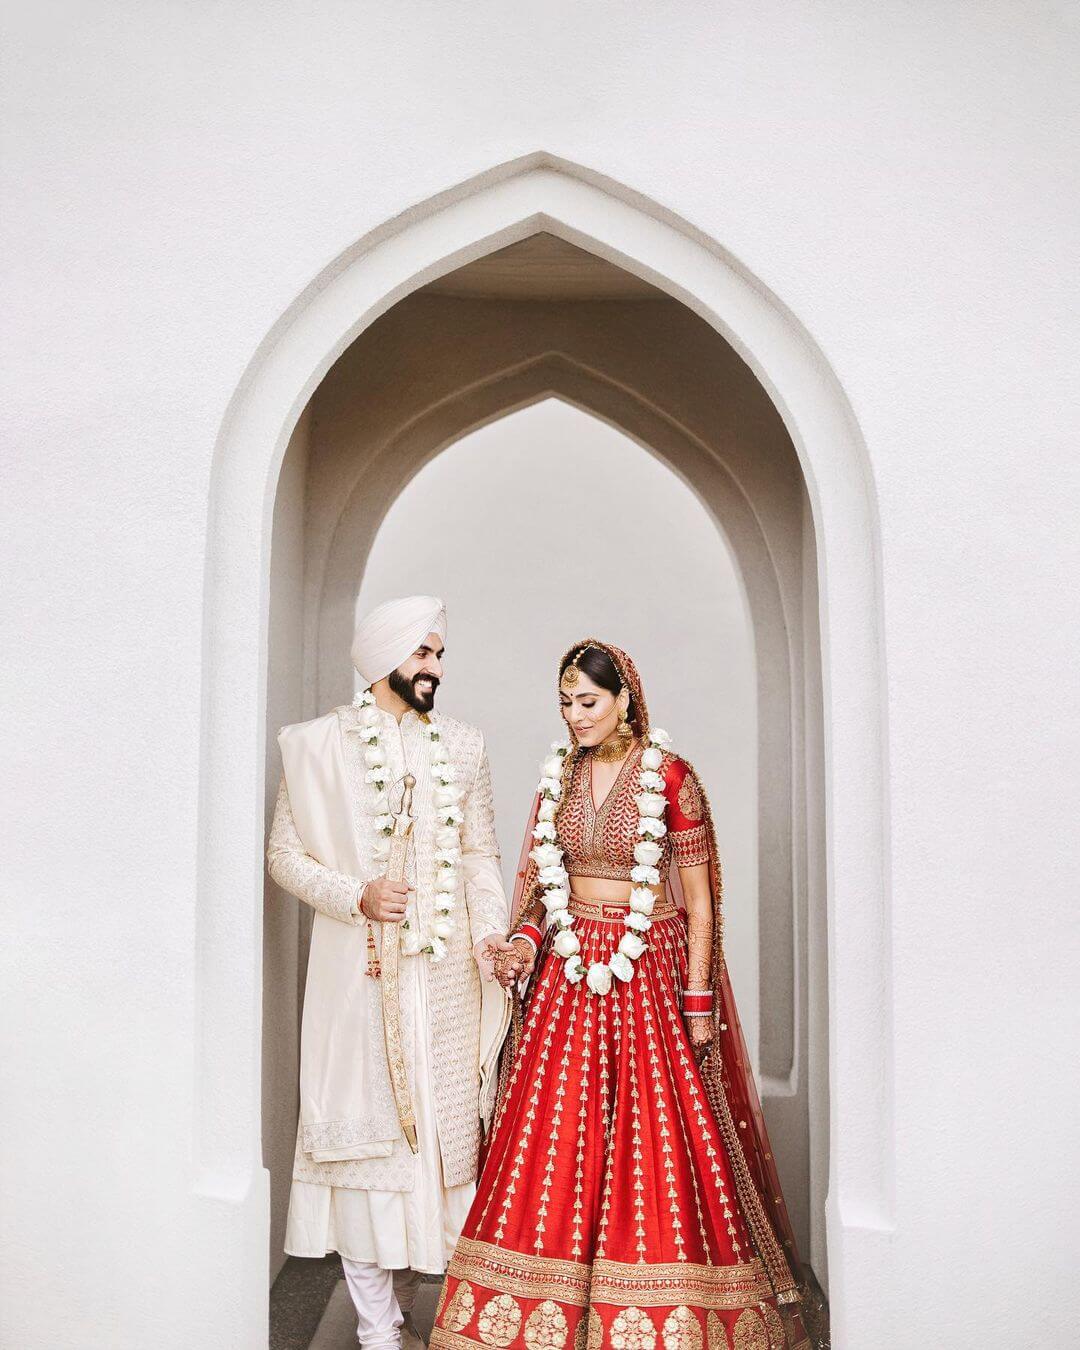  Indian Wedding Couple Poses And Photoshoot Ideas